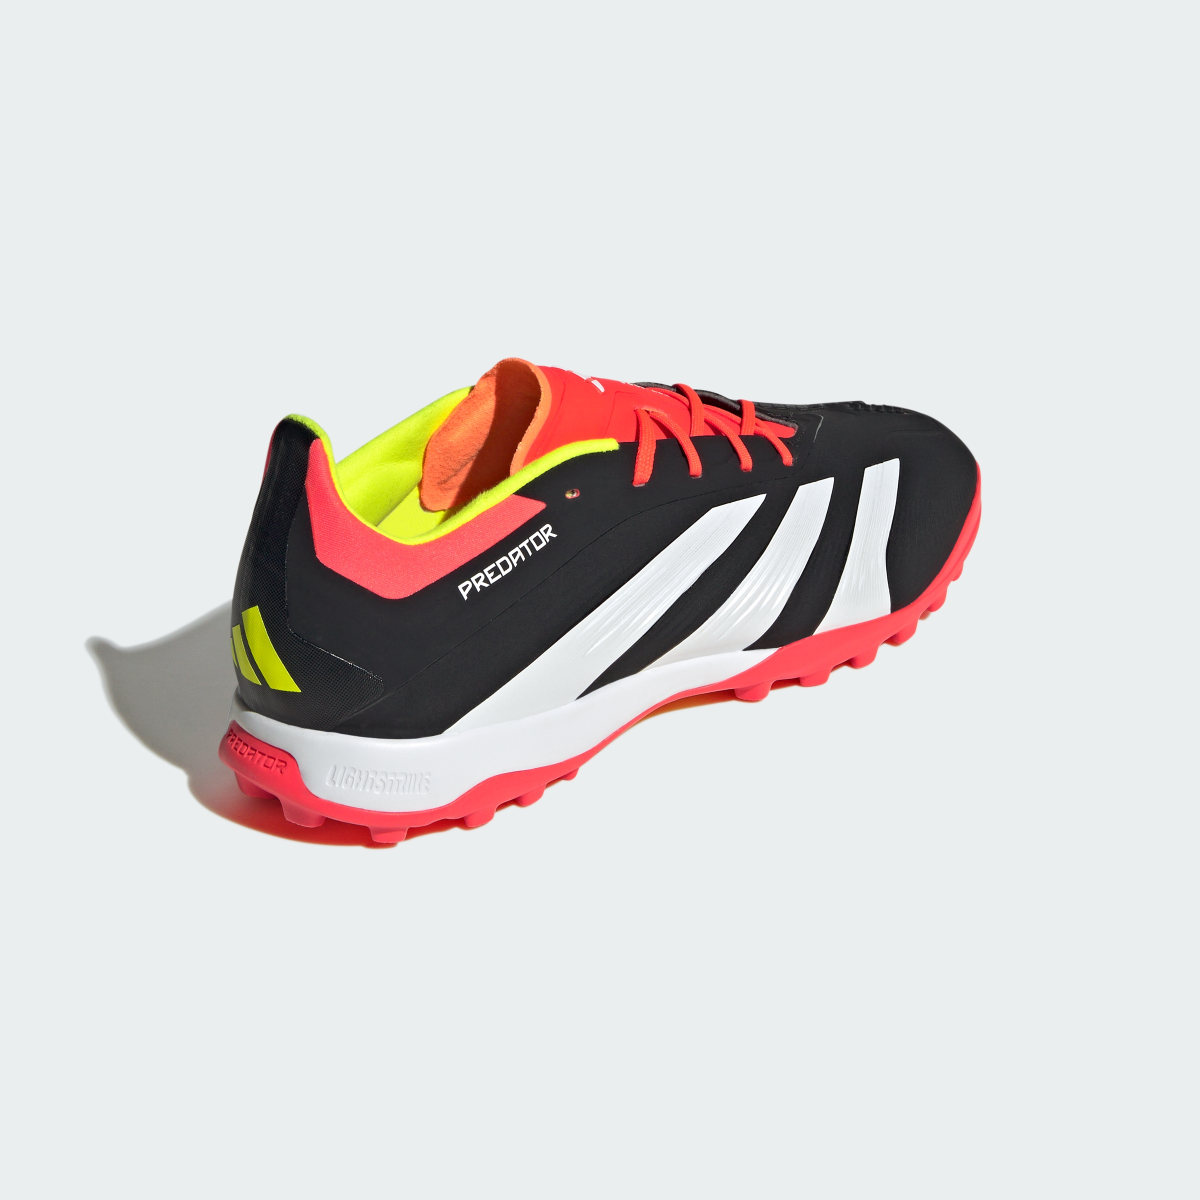 Adidas Predator Elite Turf Football Boots. 9